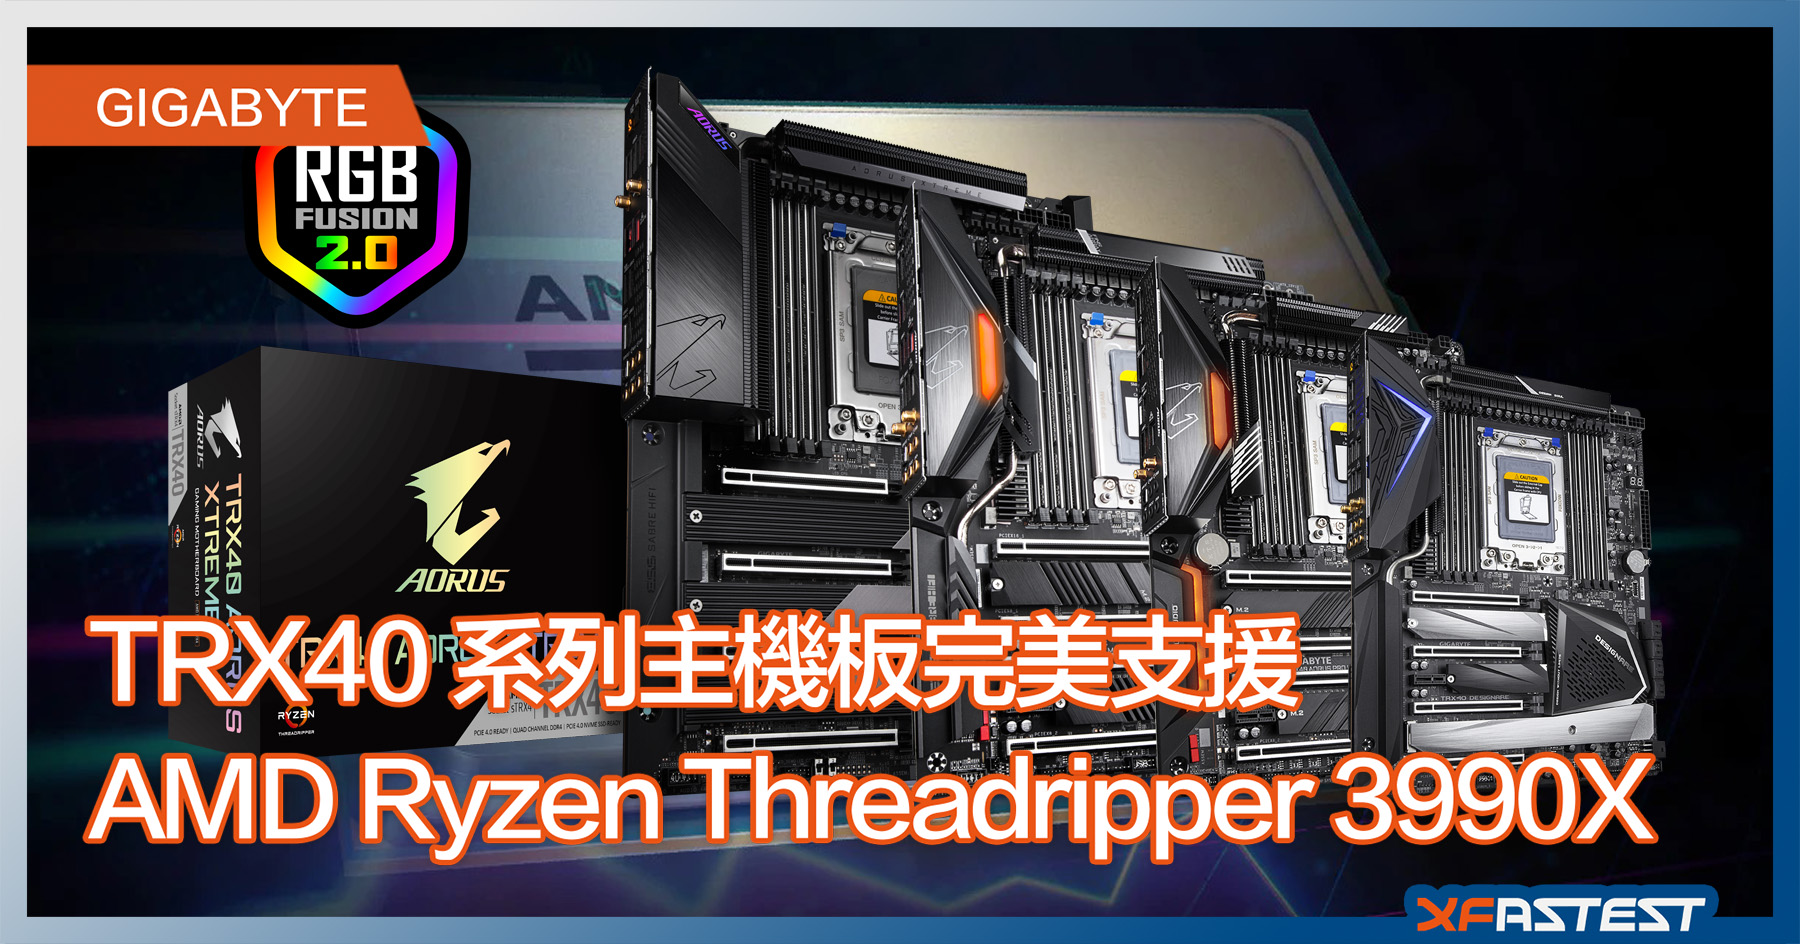 Gigabyte Trx40 系列主機板完美支援amd Ryzen Threadripper 3990x 處理器 Xfastest Hong Kong